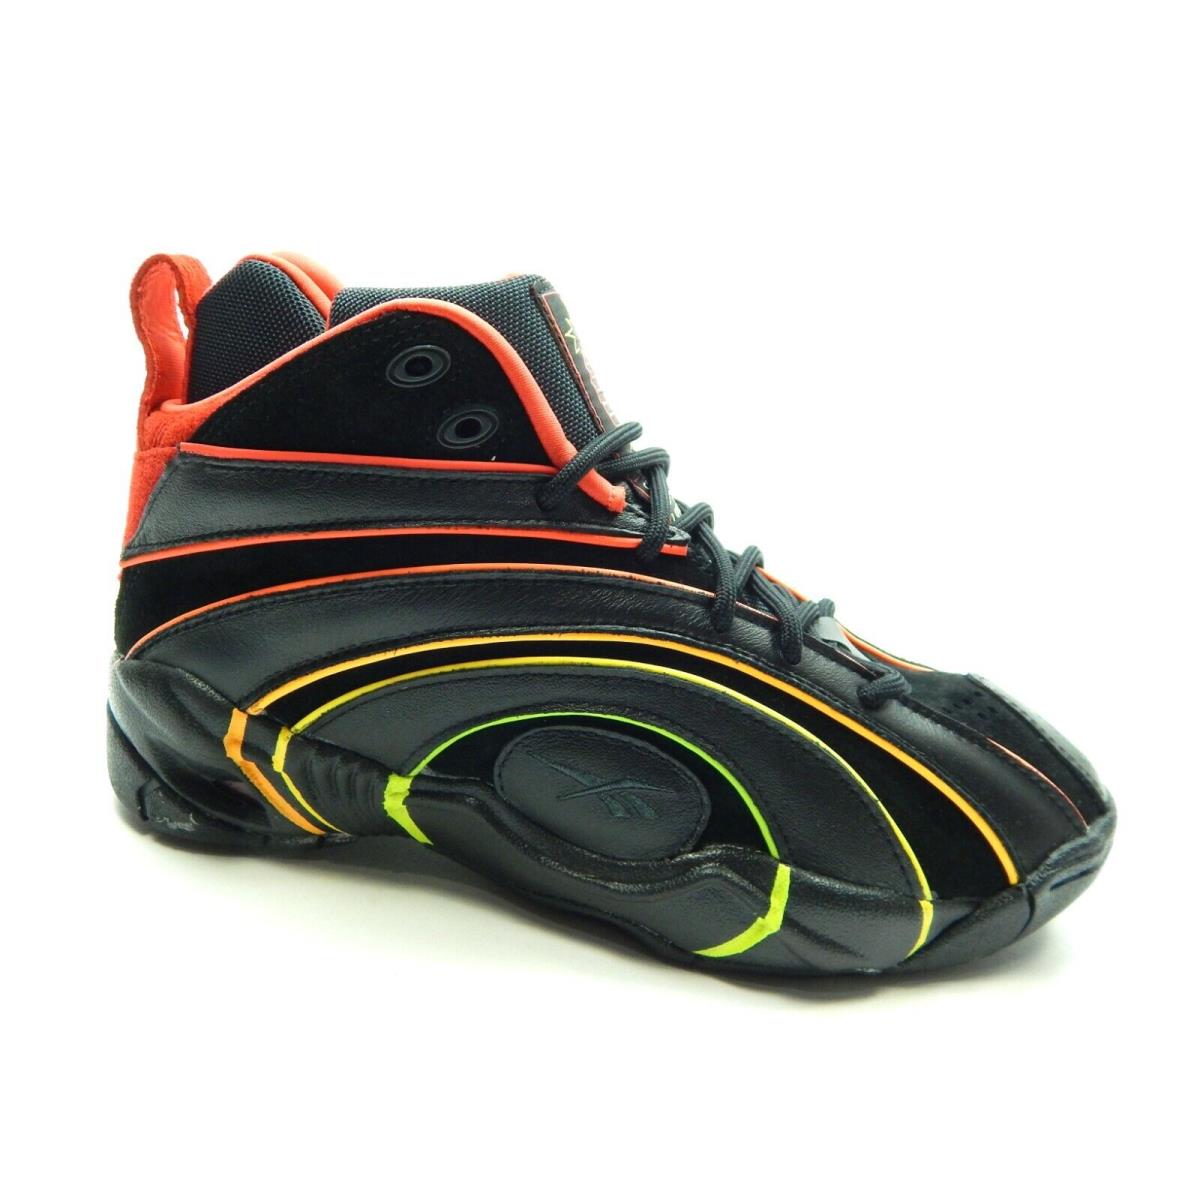 Reebok Men`s Shaqnosis Basketball H68851 Black Red Shoes Size 8.5 - Black